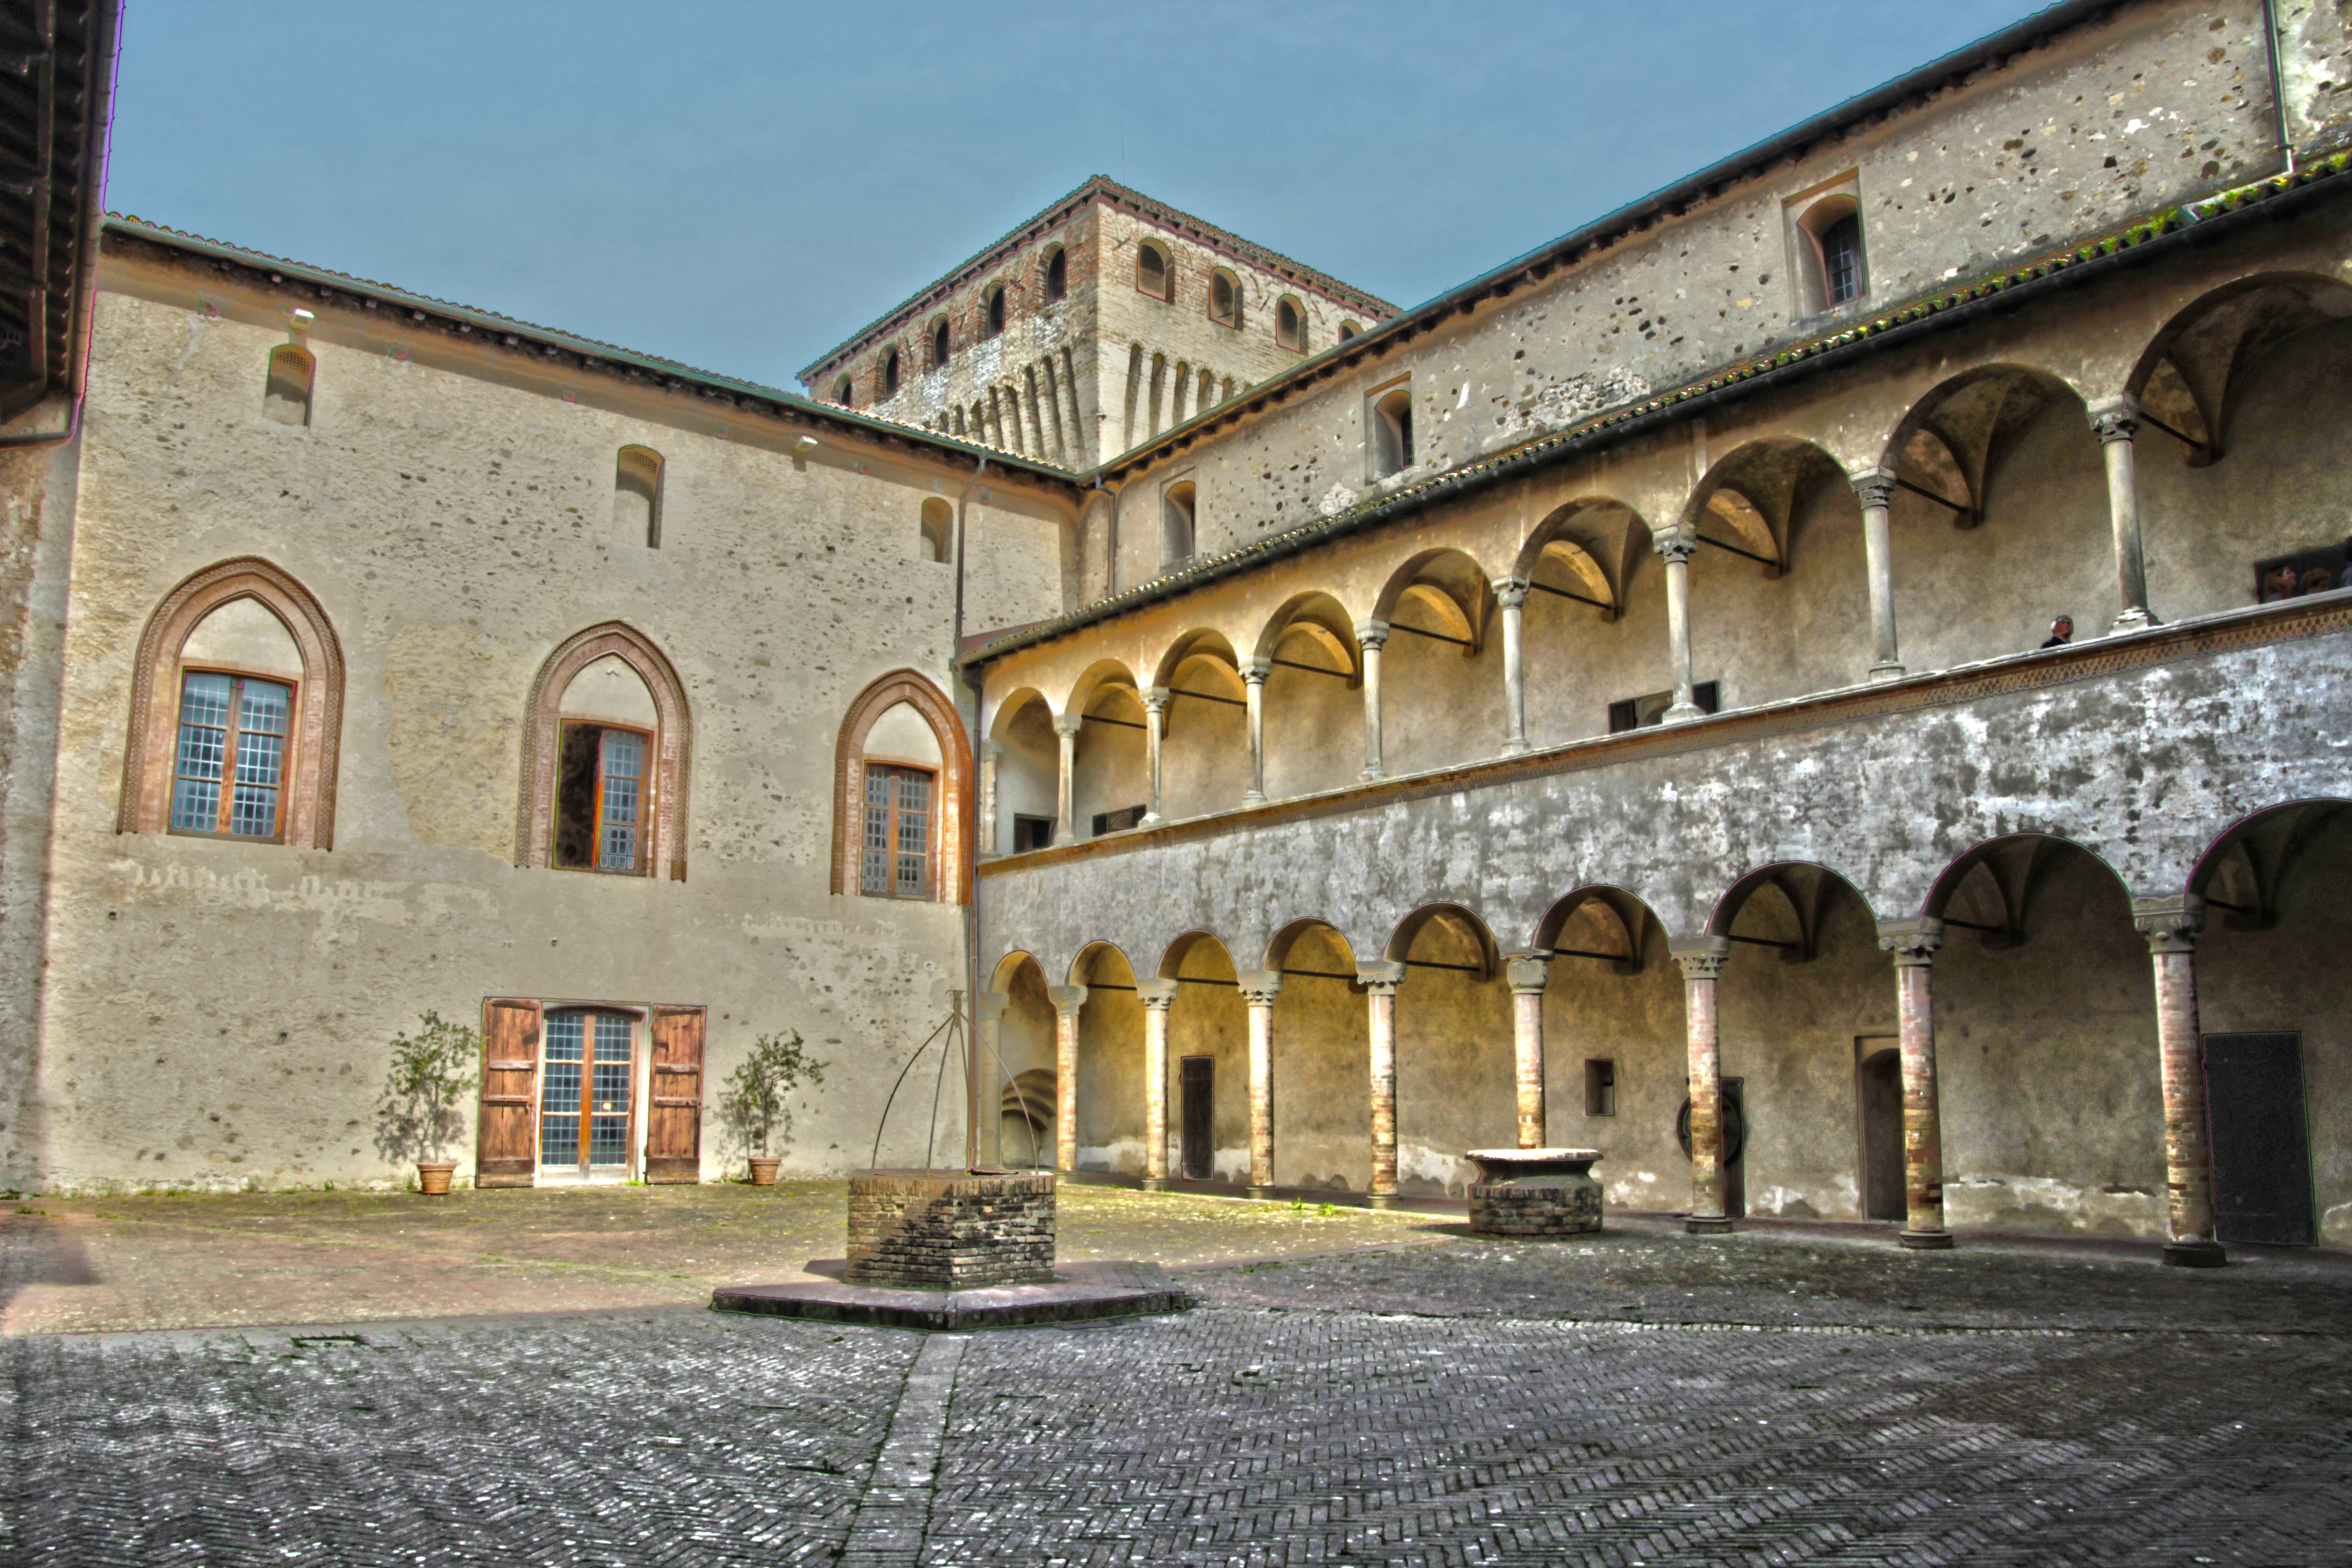 photo: https://upload.wikimedia.org/wikipedia/commons/e/e8/Interno_del_castello_di_torrechiara.jpg